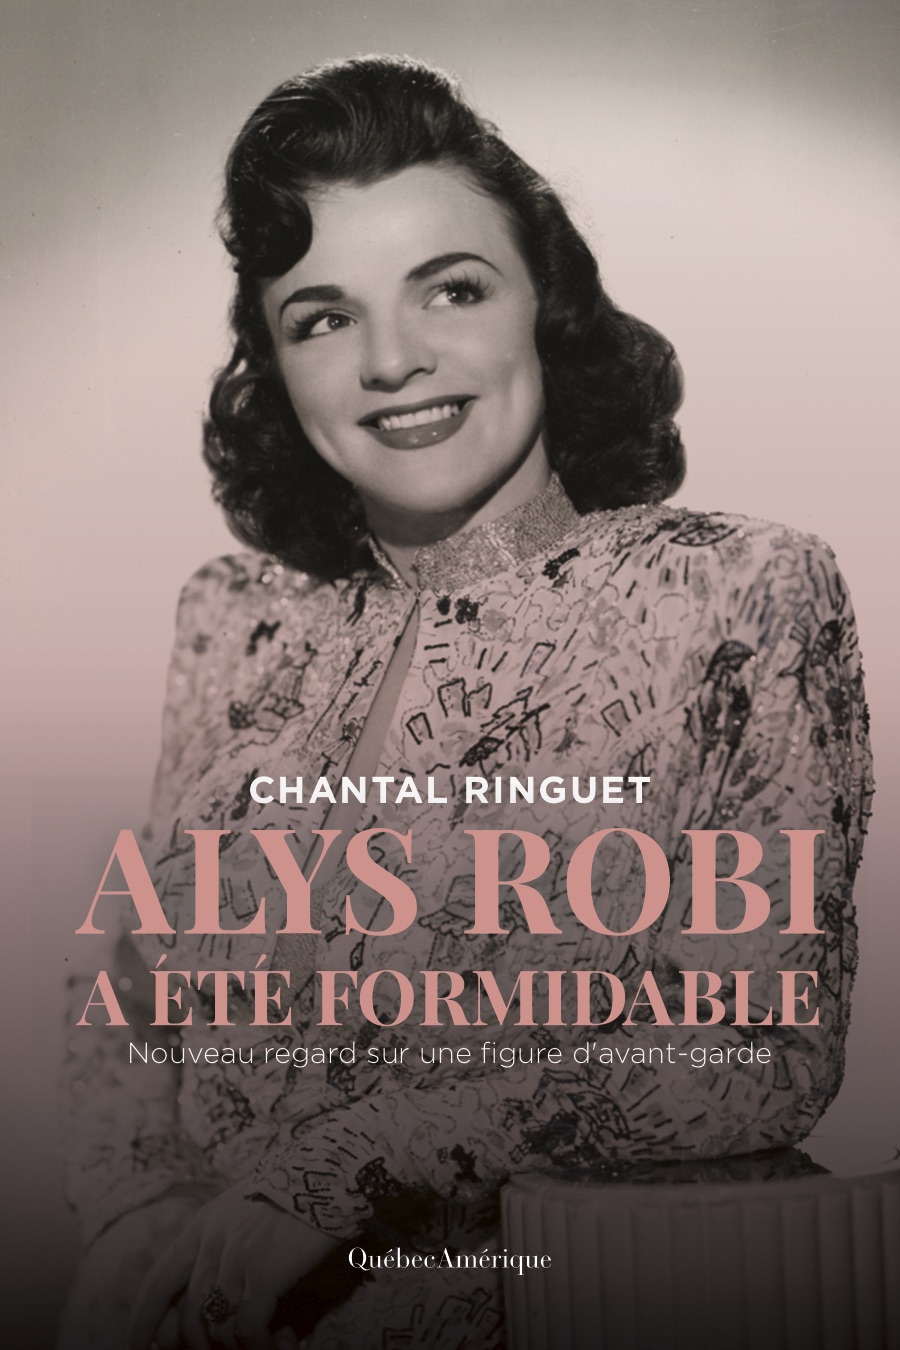 Book Launch – Alys Robi a été formidable